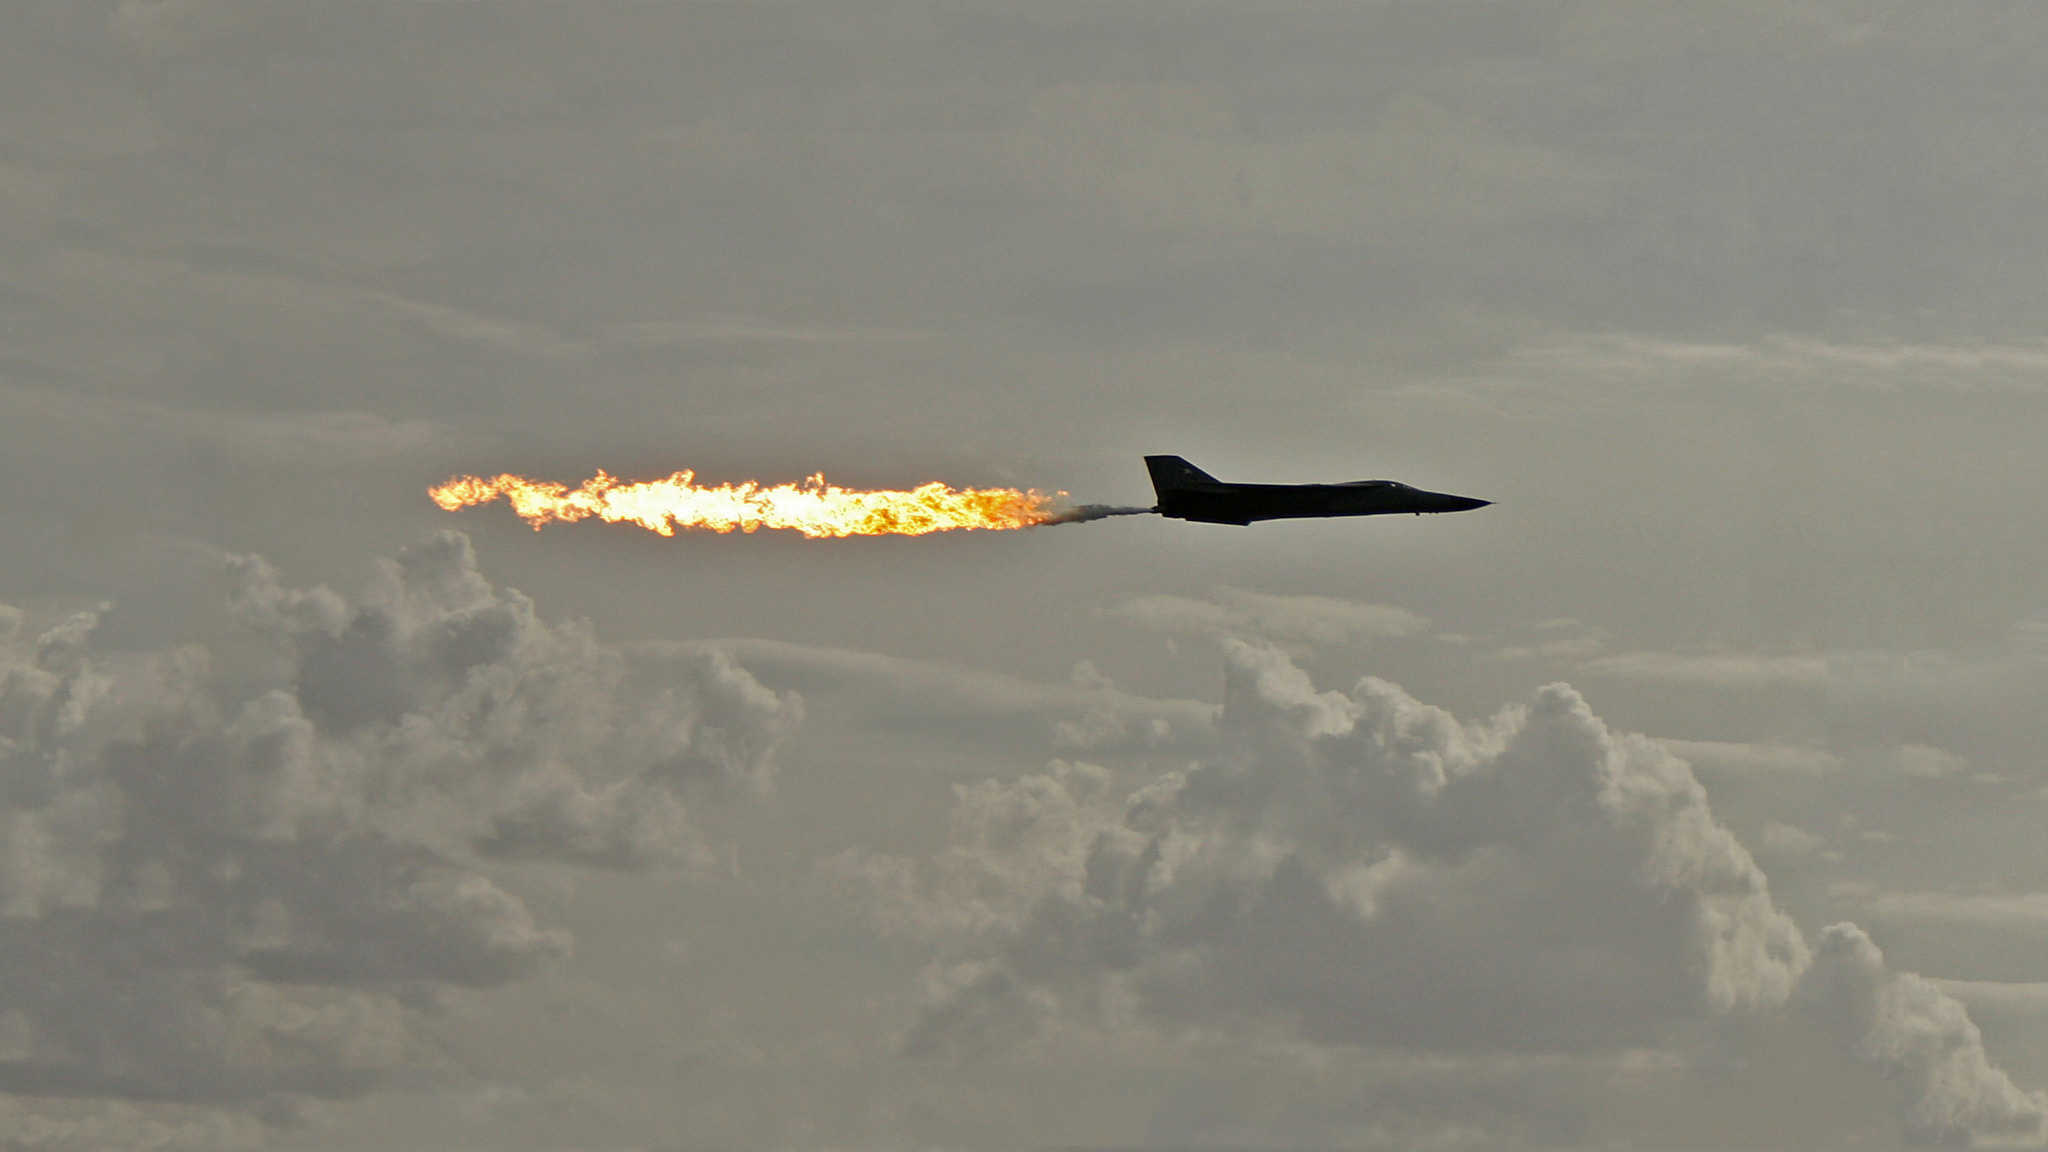 Military aircraft soaring through the skies on a stunning desktop wallpaper.